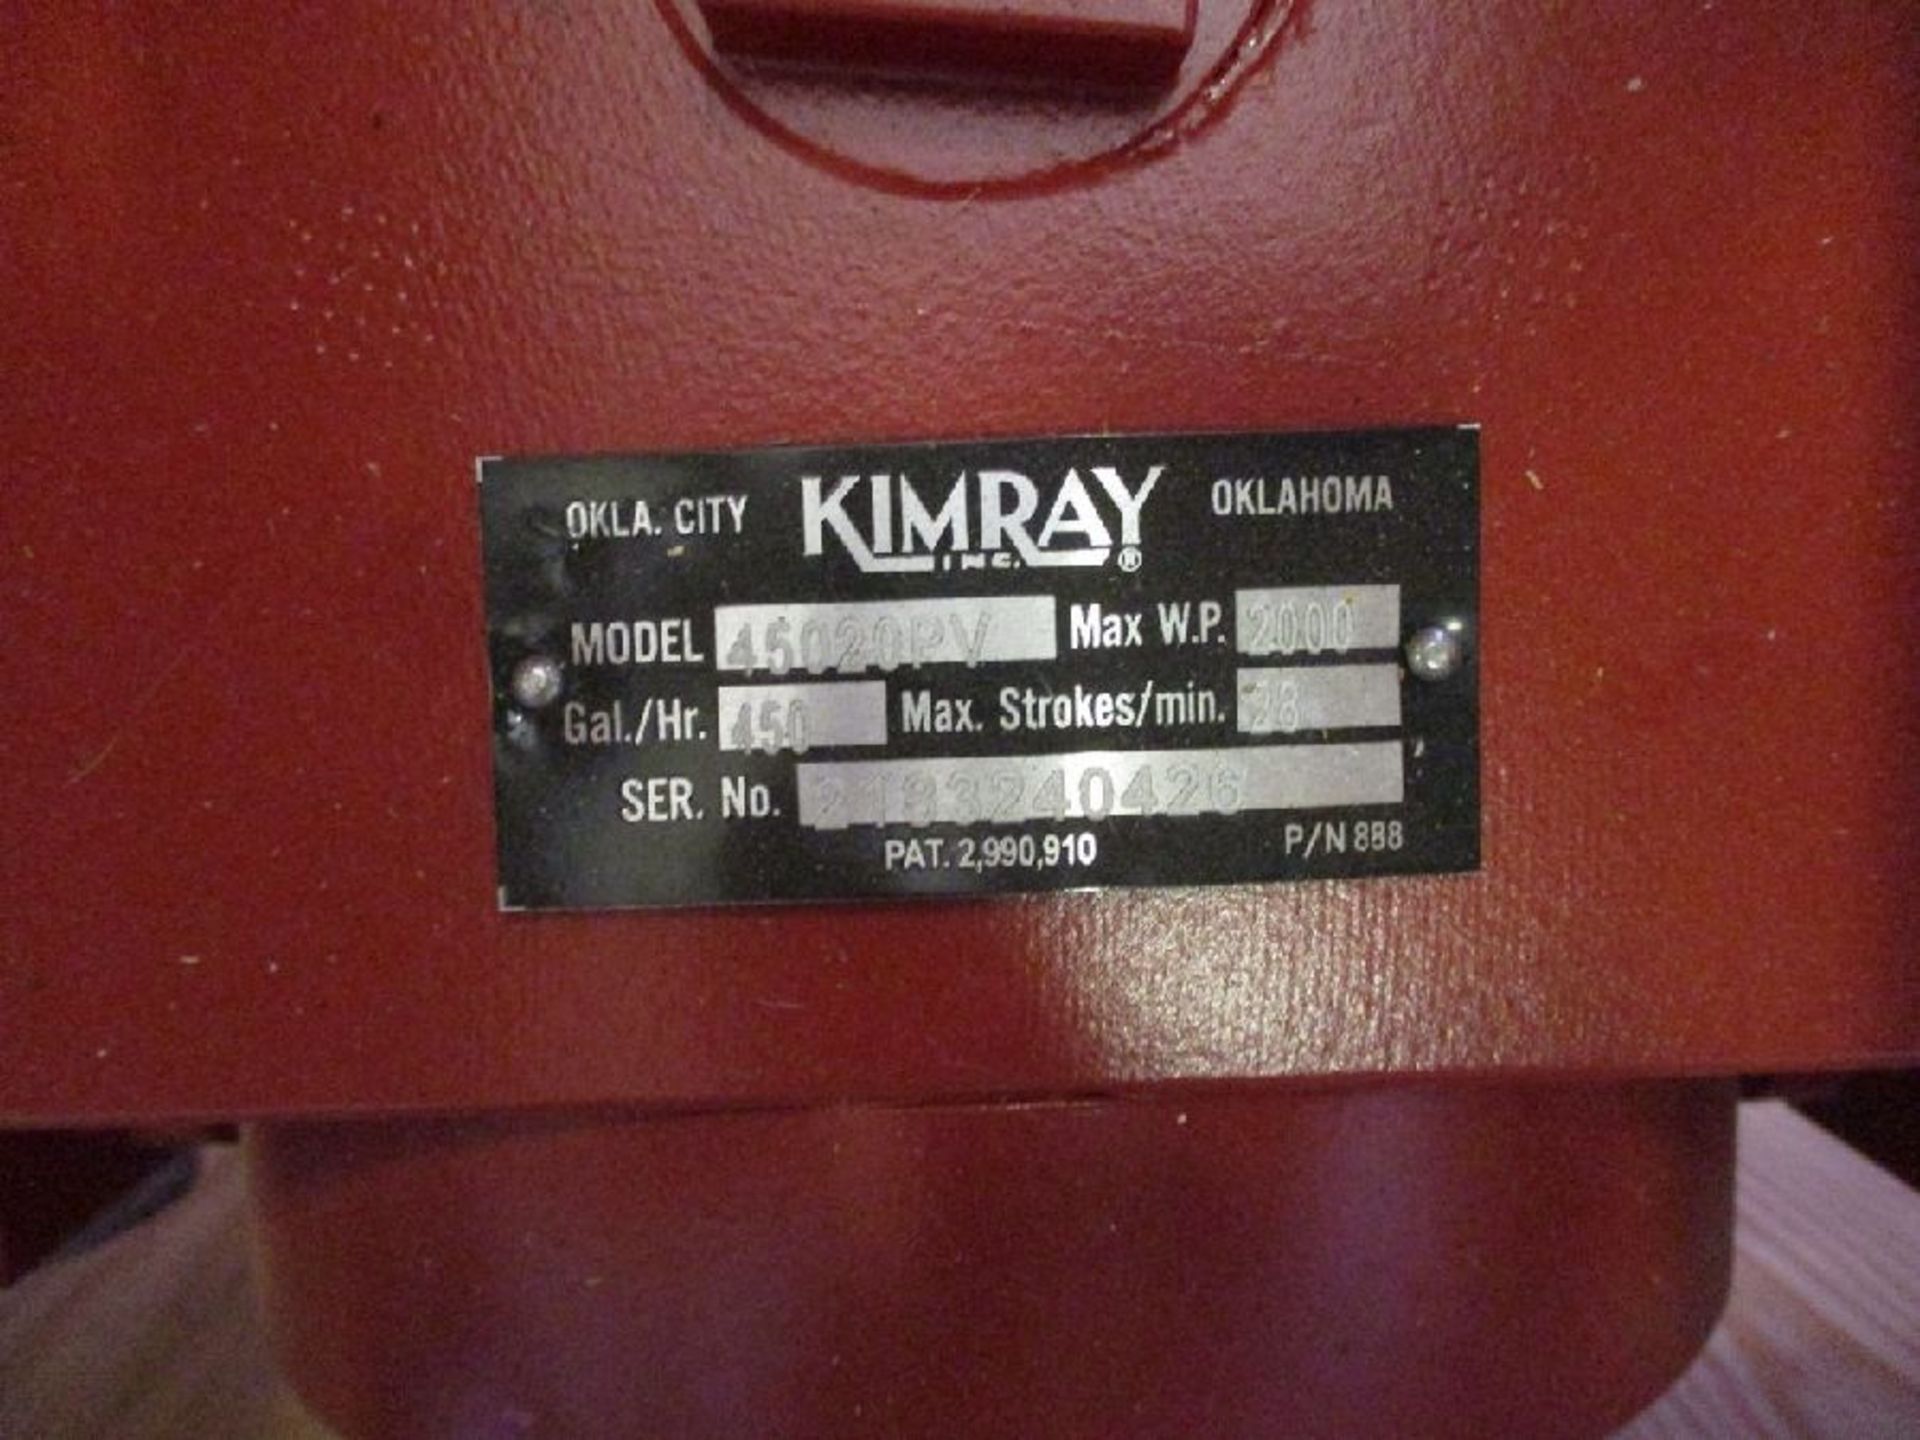 Model Kimray #GAJHSN 45020PV Unused Glycol Pumps - Image 5 of 6